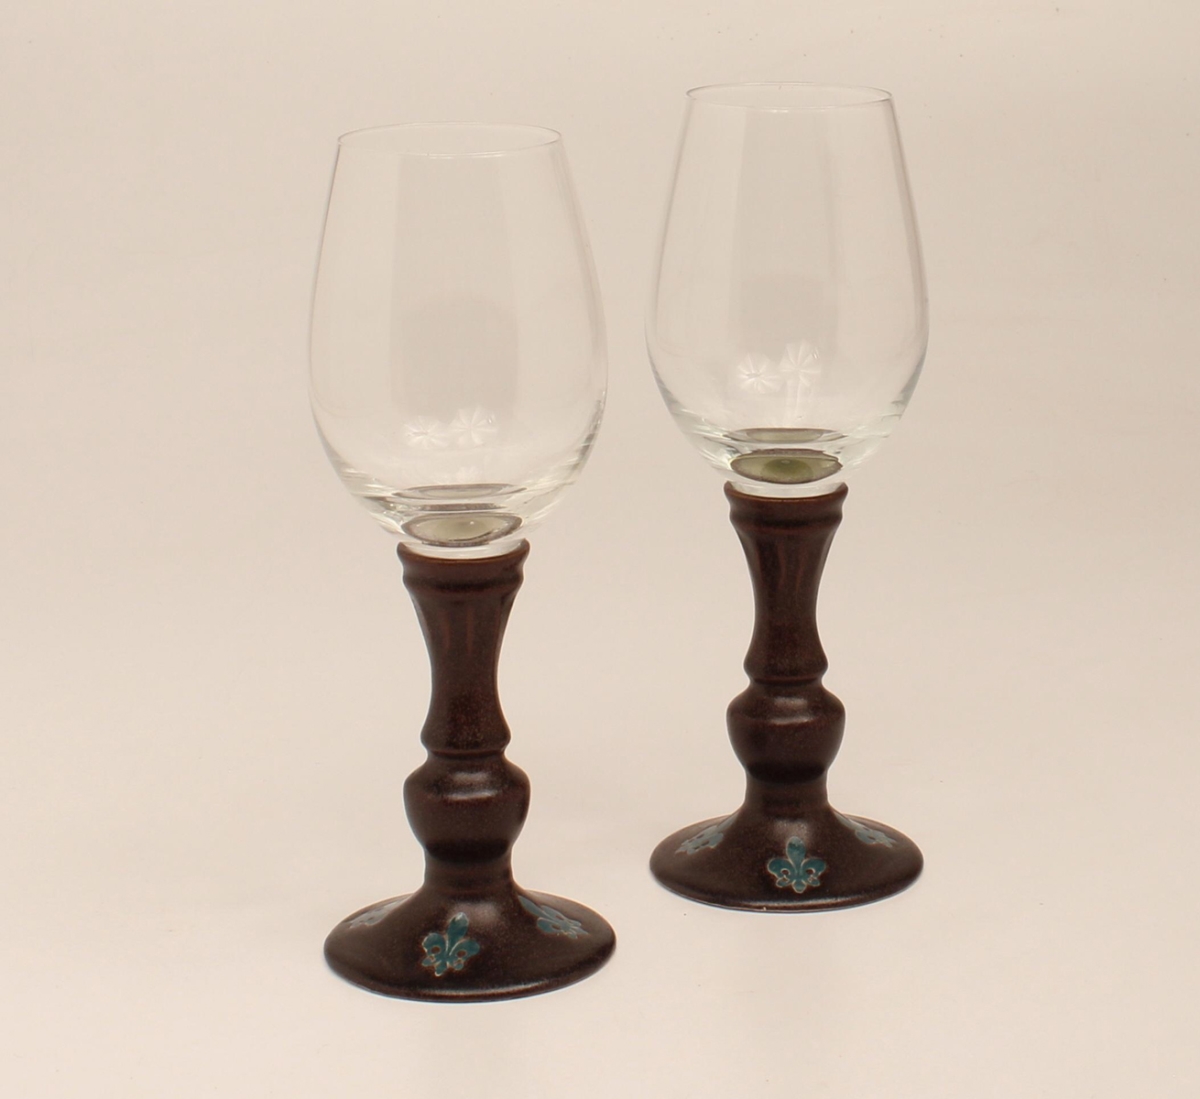 94440 Monarch Wine Glass Stemware Set - 2 Piece